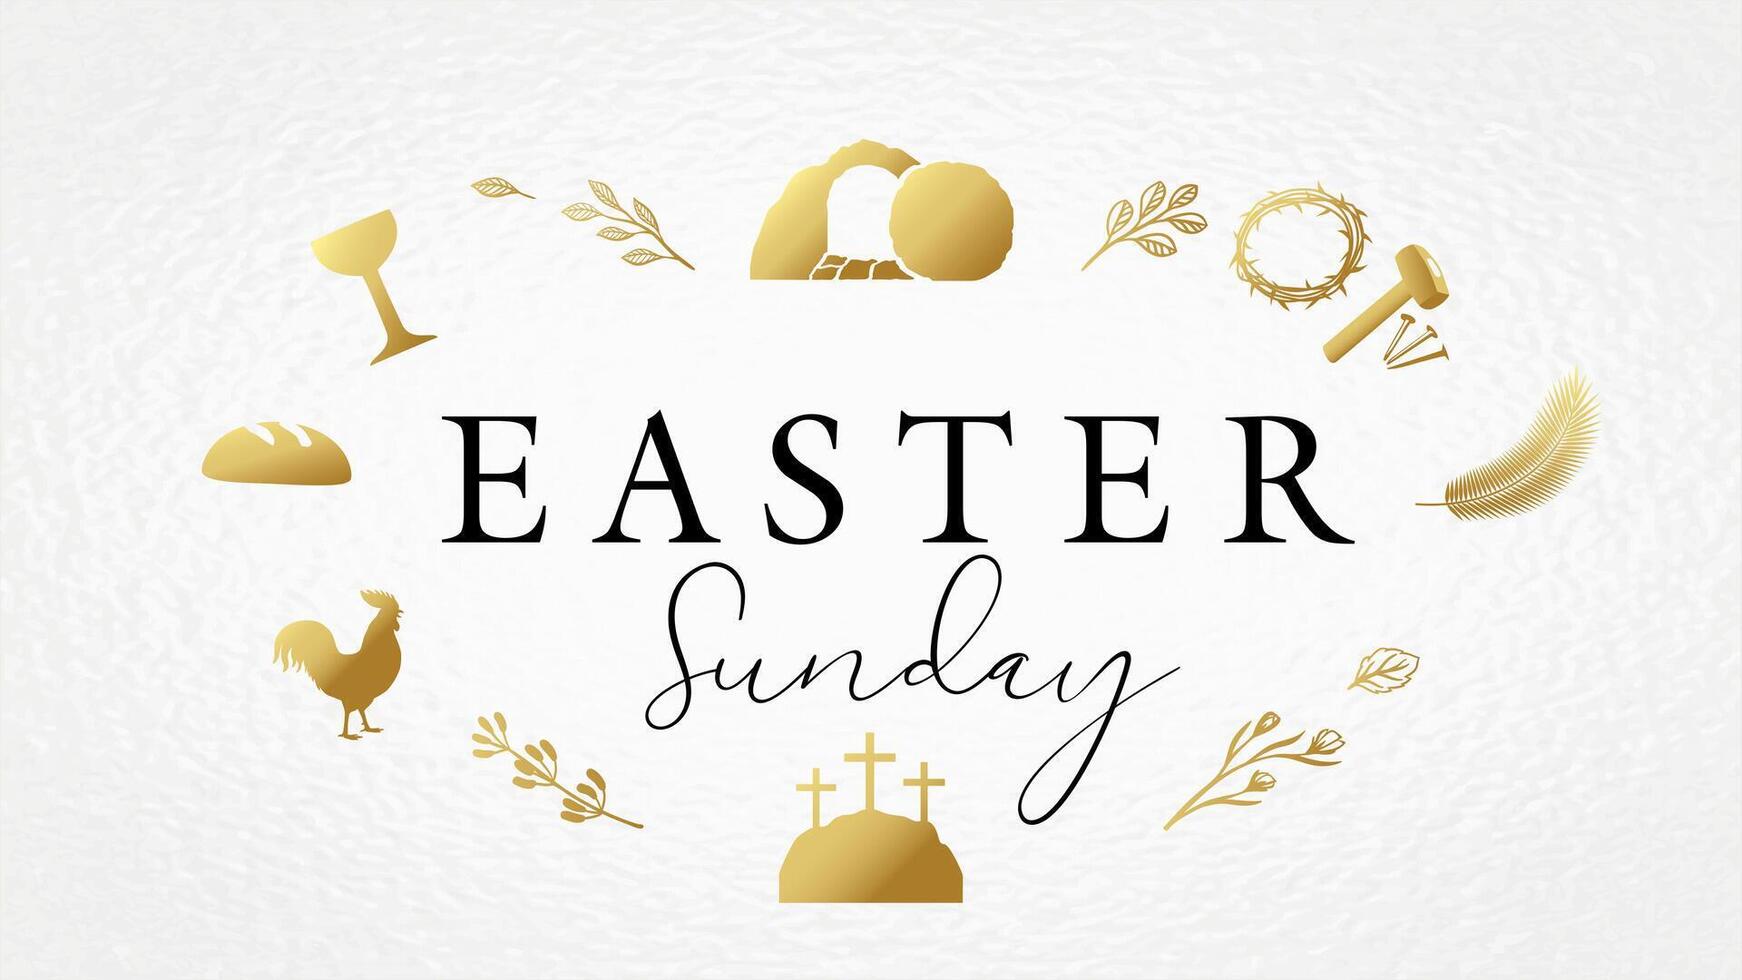 Iglesia Servicio invitación concepto. Pascua de Resurrección domingo celebracion vector